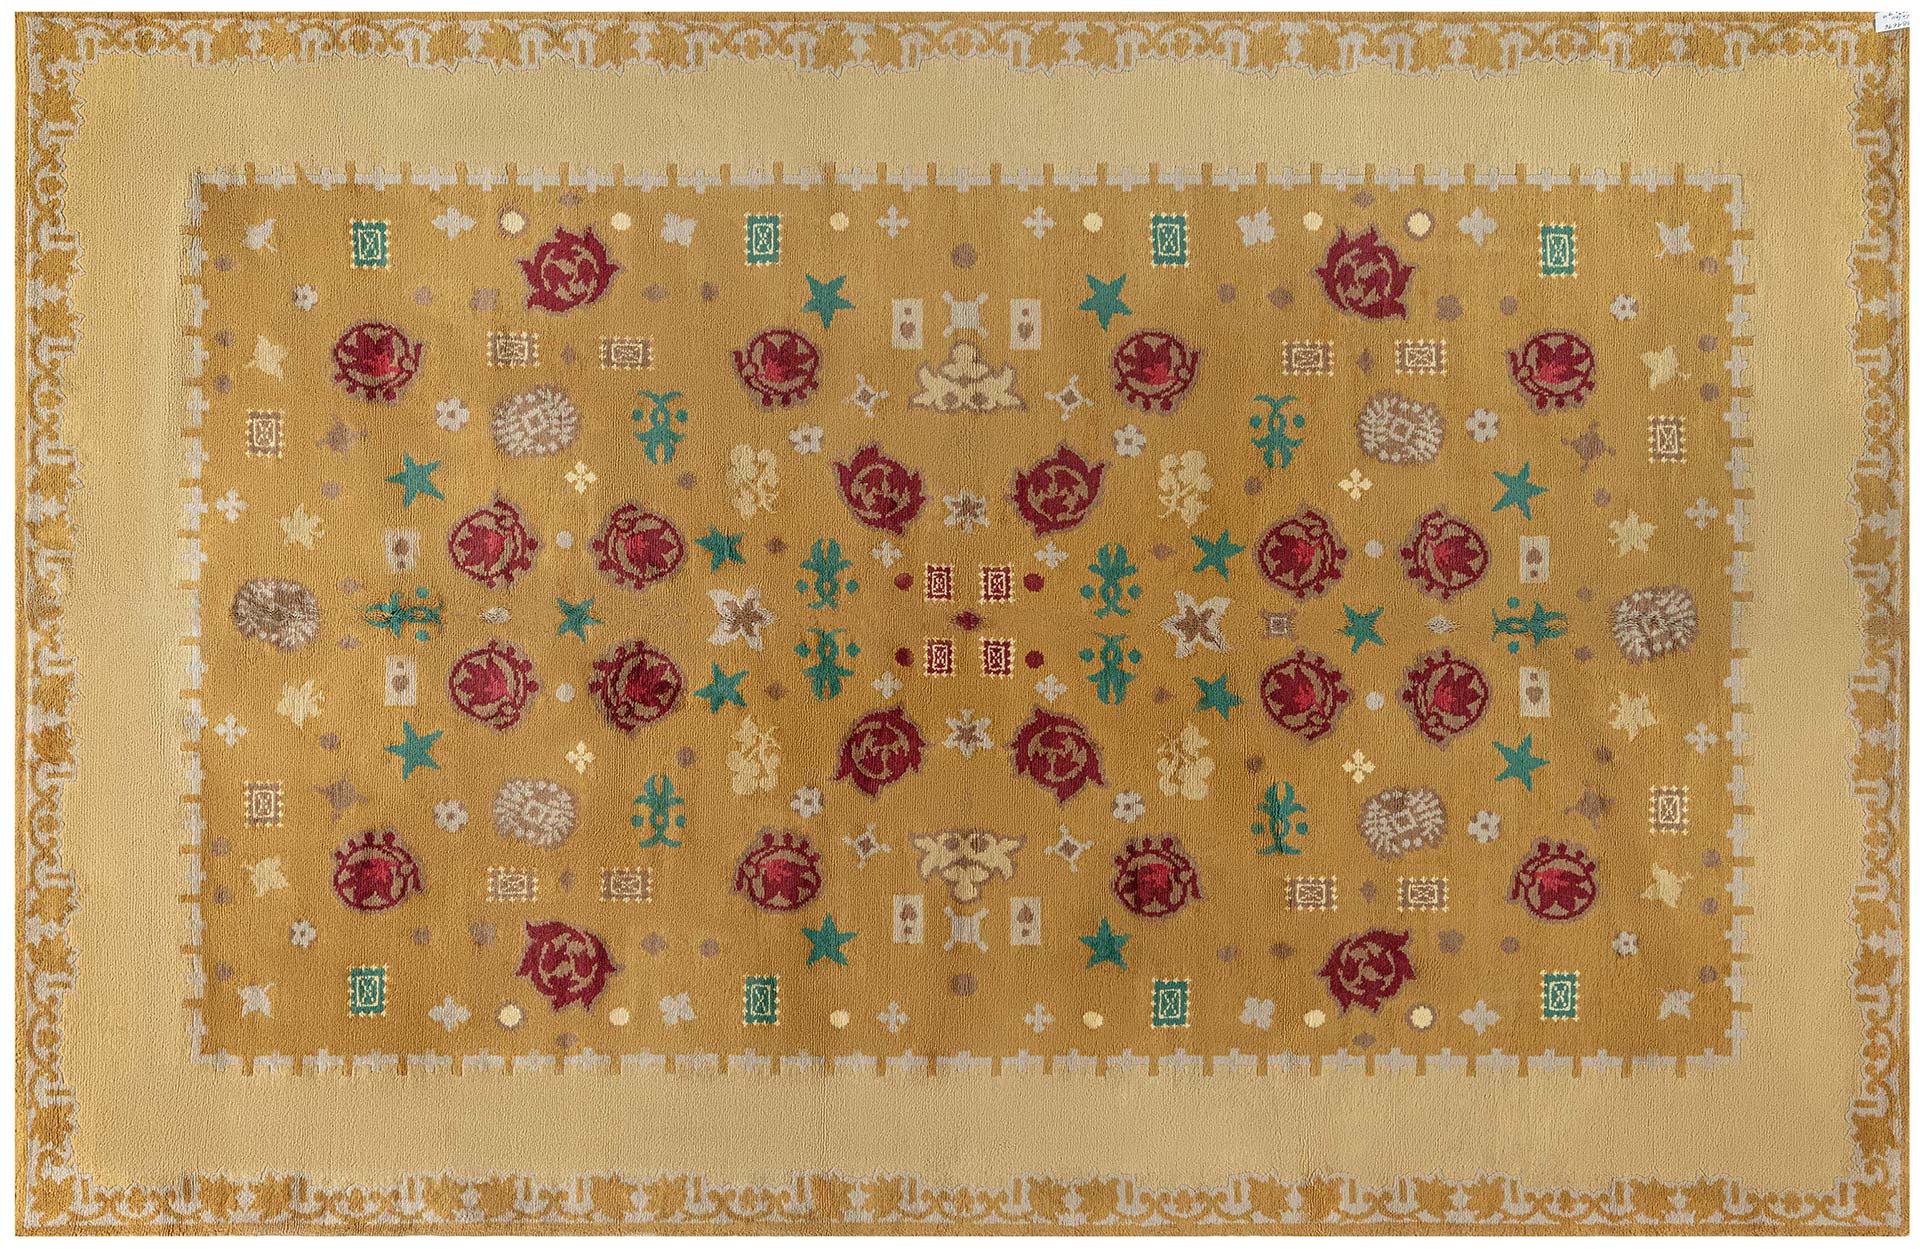 A vintage rug in inviting, warm colors by Paule Leleu, Doris Leslie Blau Collection.